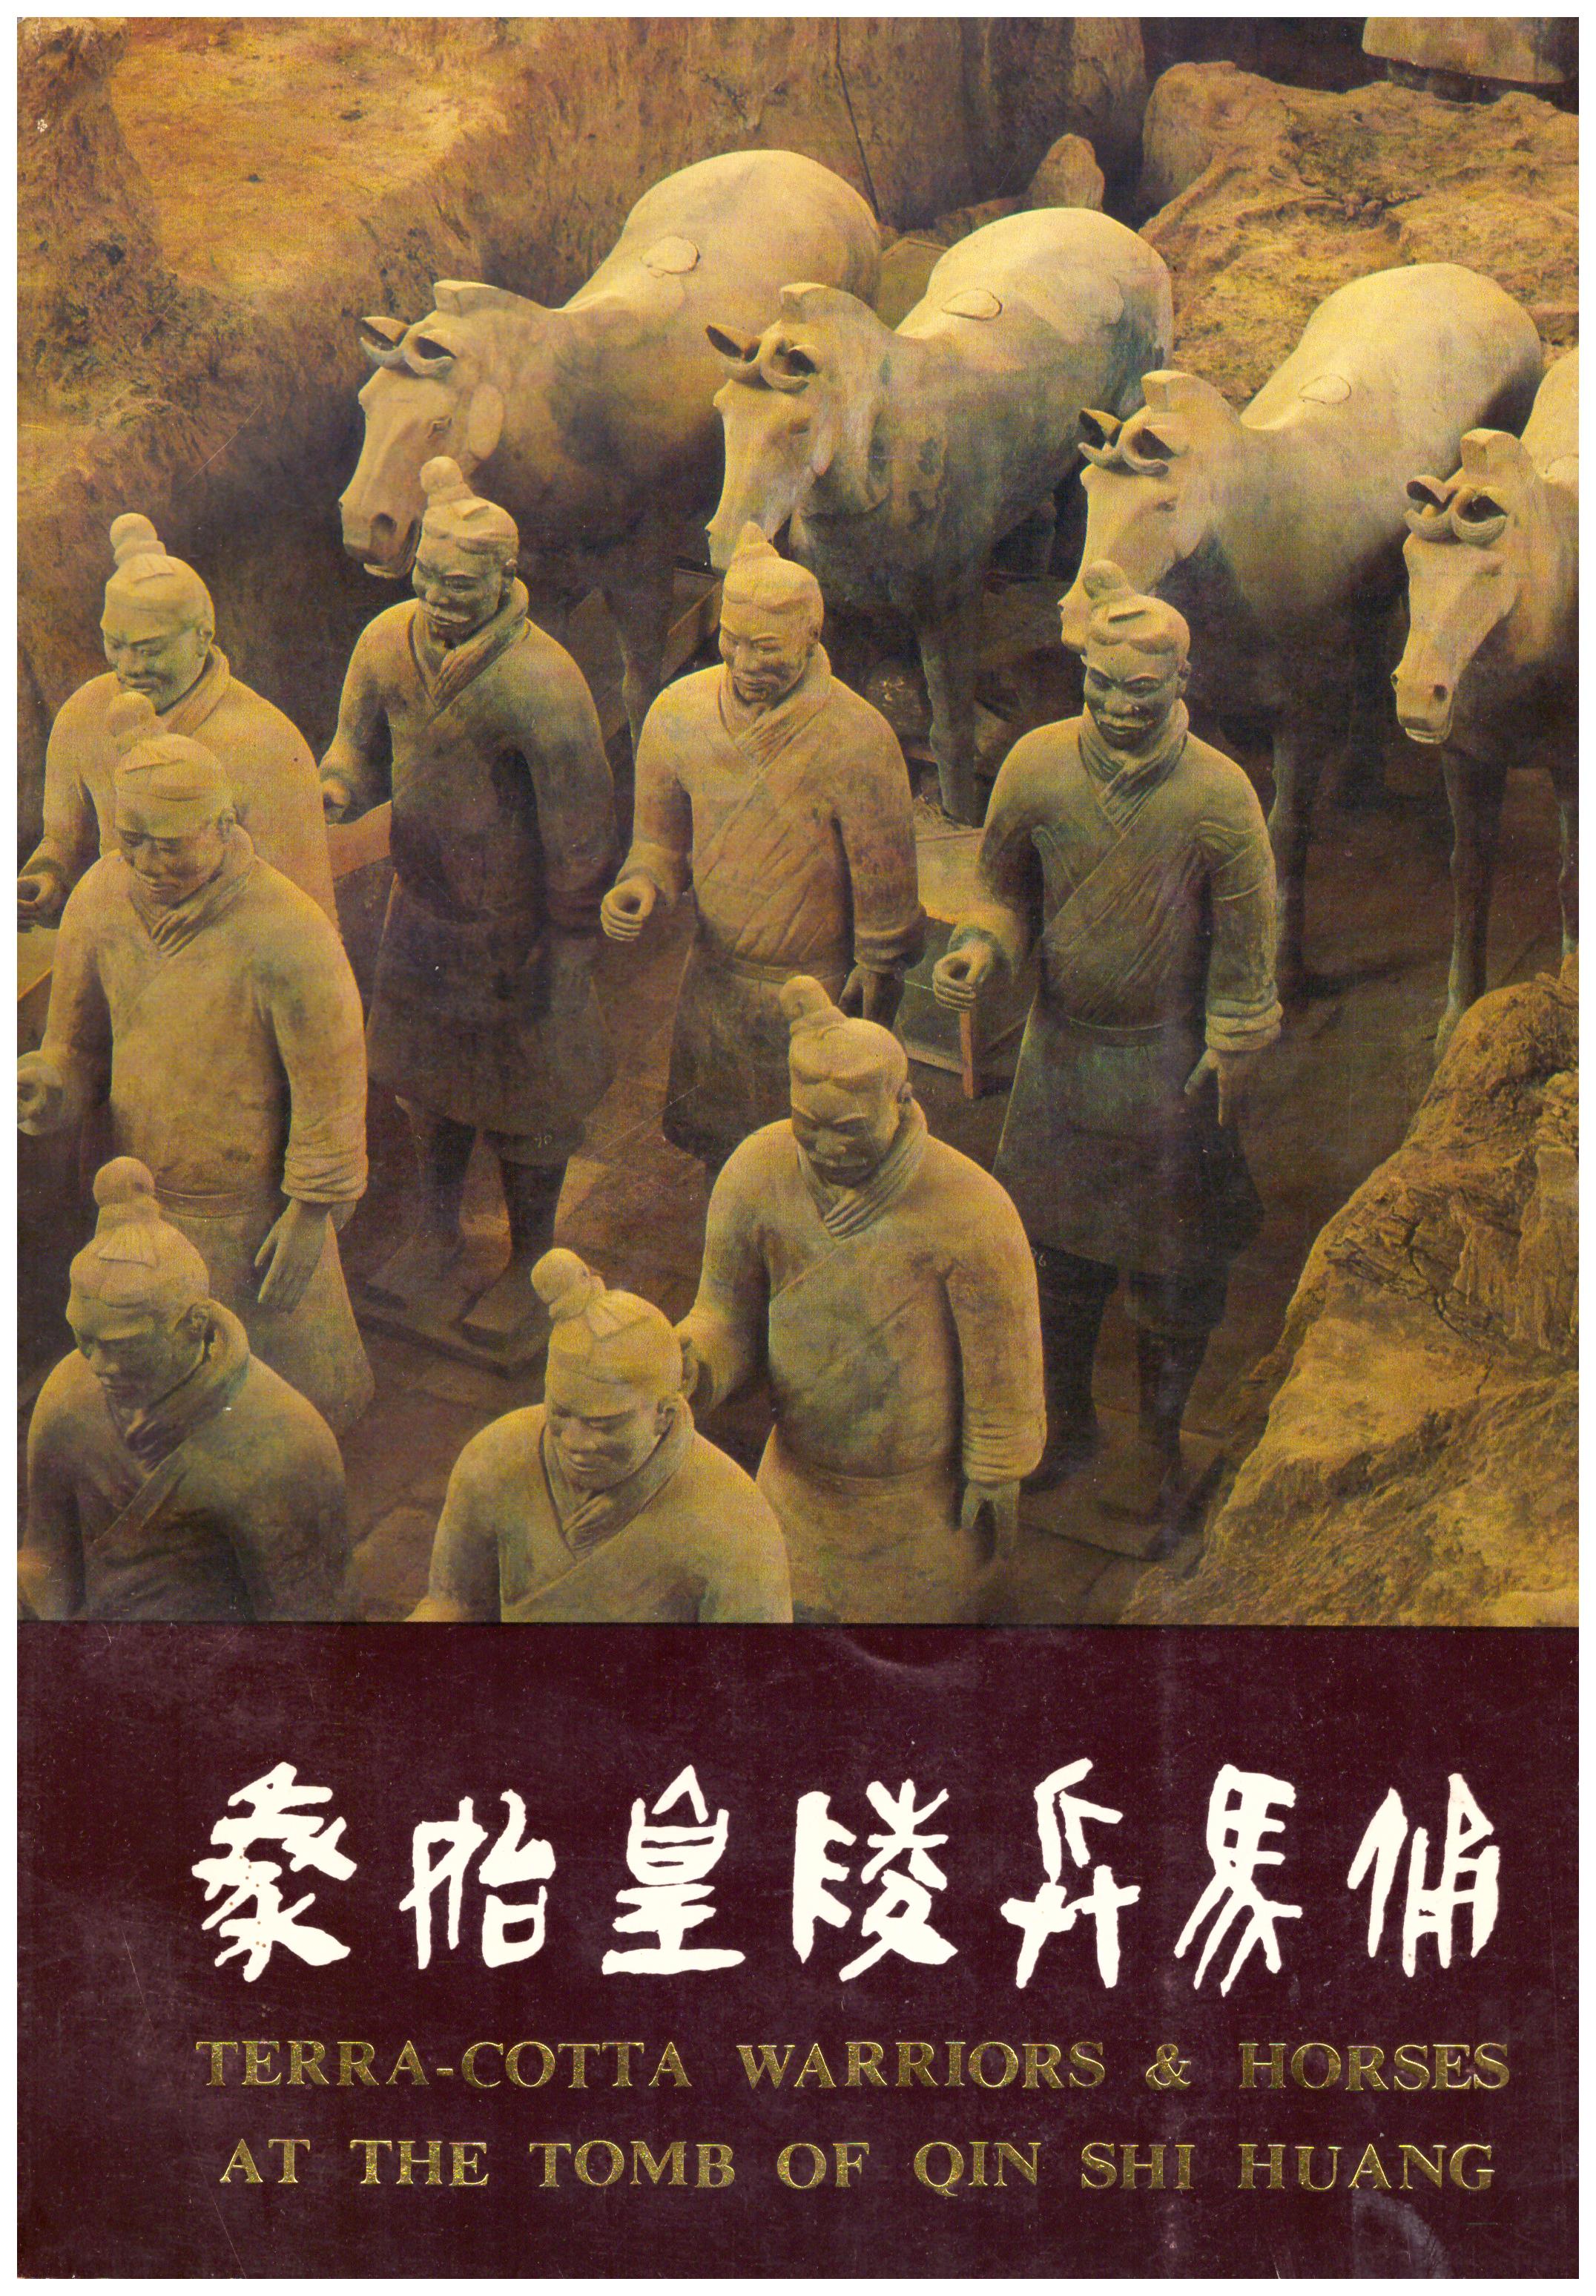 Titolo: Terra-cotta warriors and horses     Autore: AA.VV.    Editore: n.d.